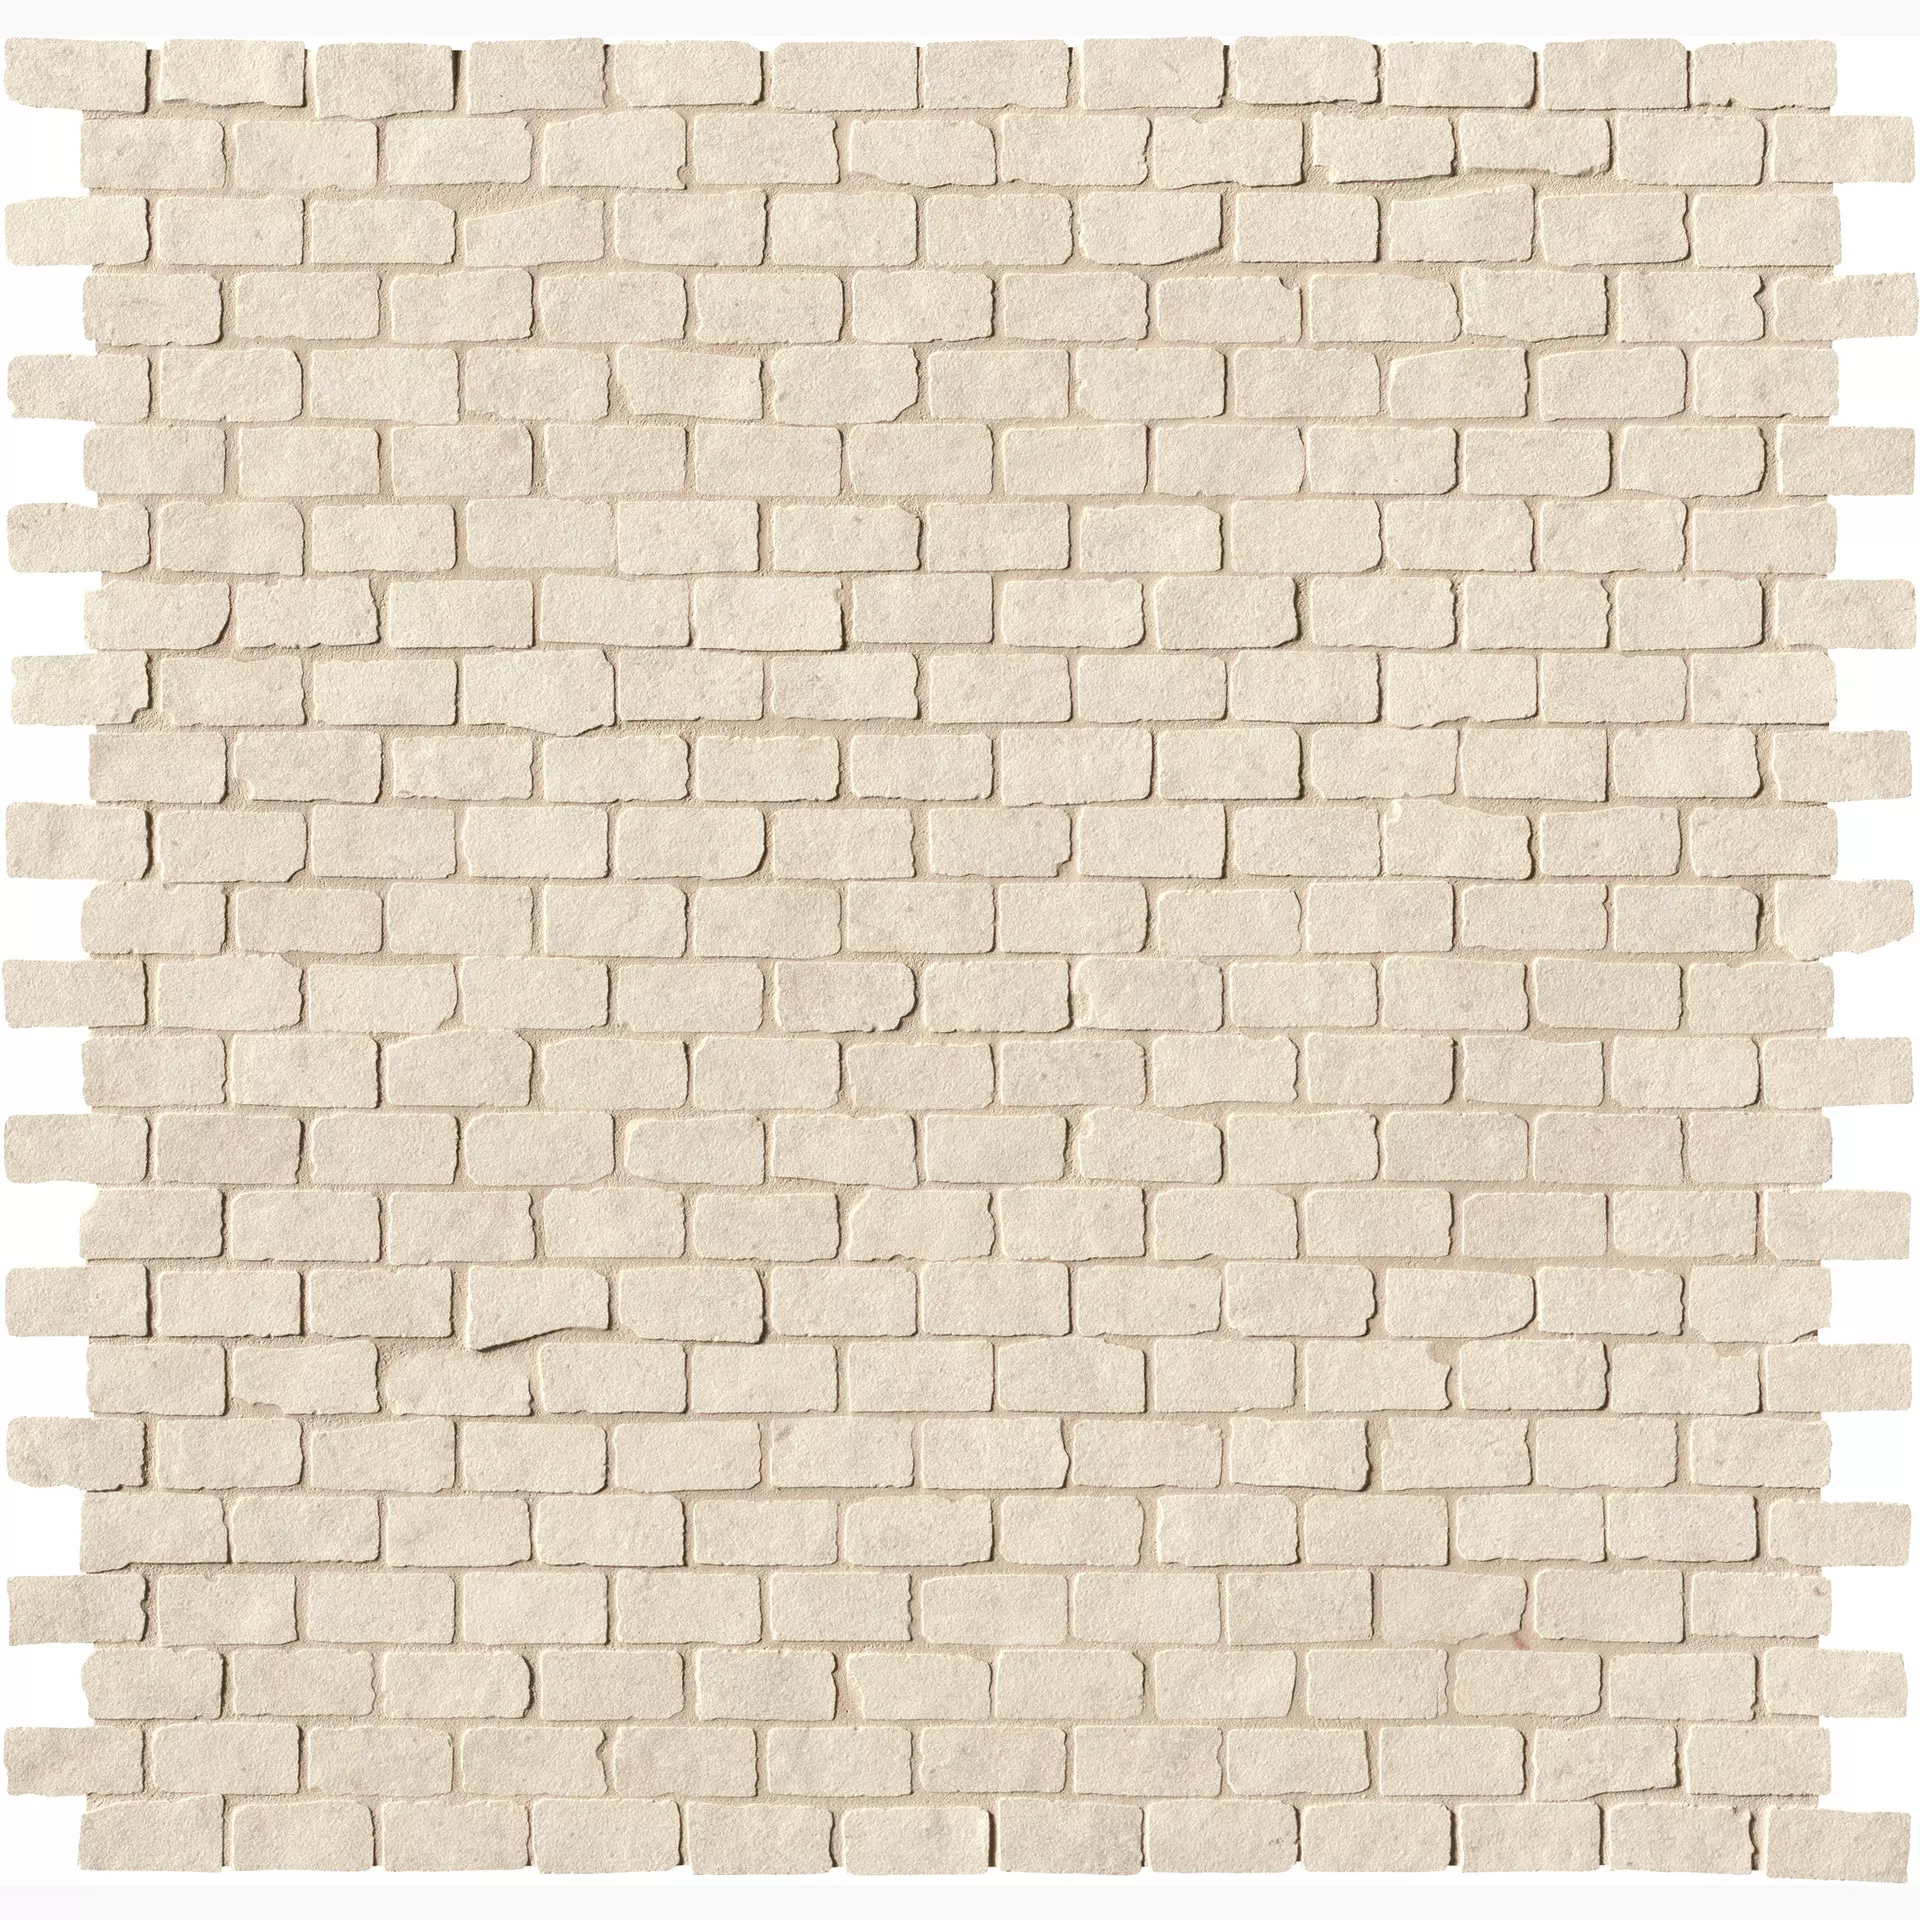 FAP Lumina Stone Beige Anticato Beige fOMM antiquiert 30,5x30,5cm Mosaik Brick